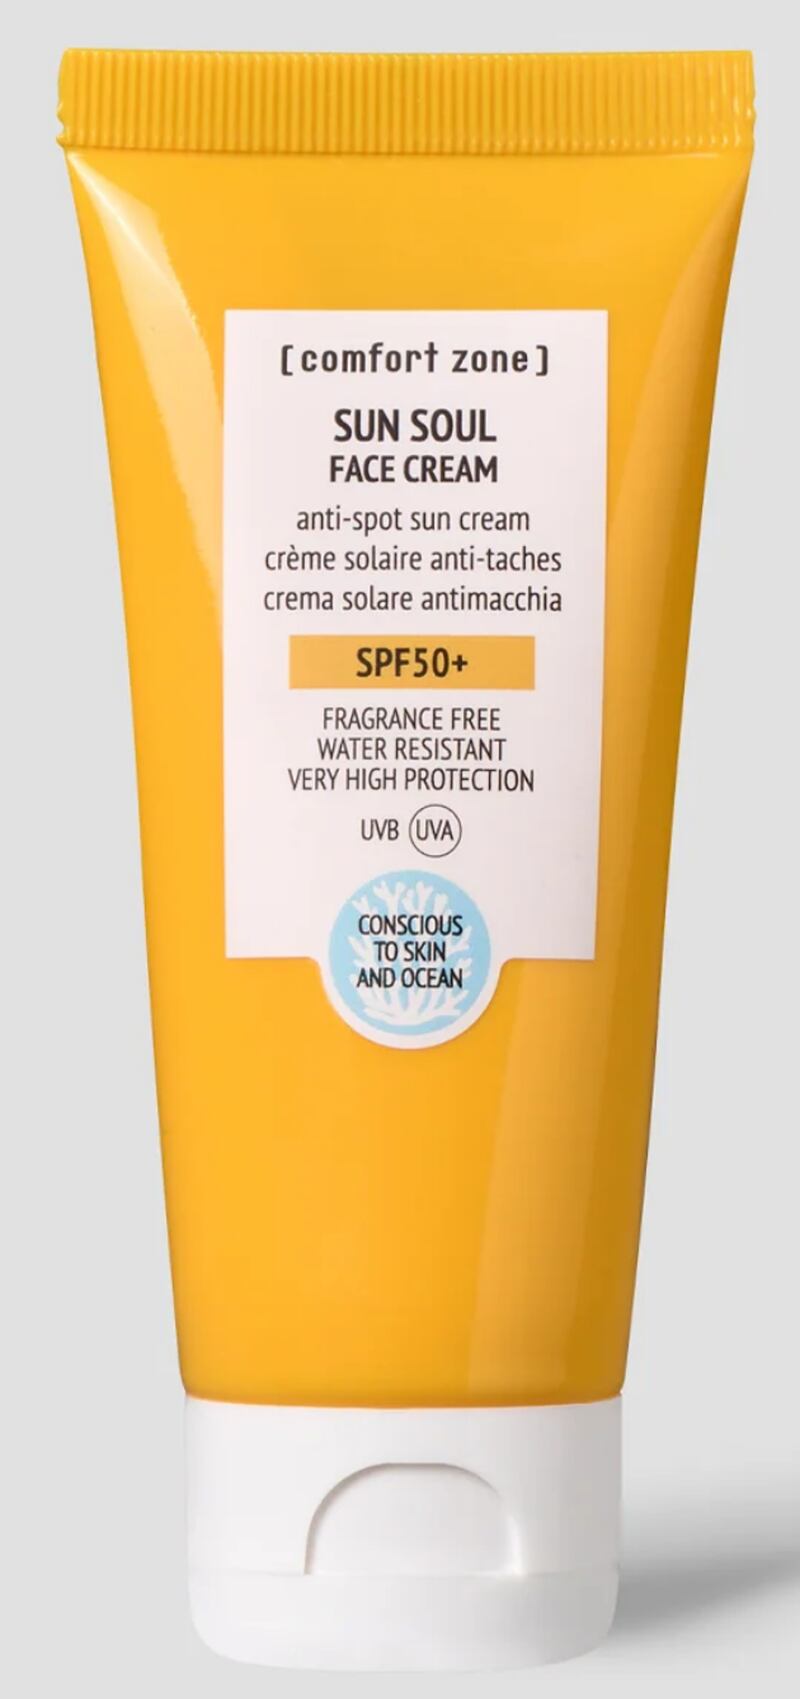 Sun Soul face cream SPF 50+, Dh160, Comfort Zone at Eideal. Photo: Eideal